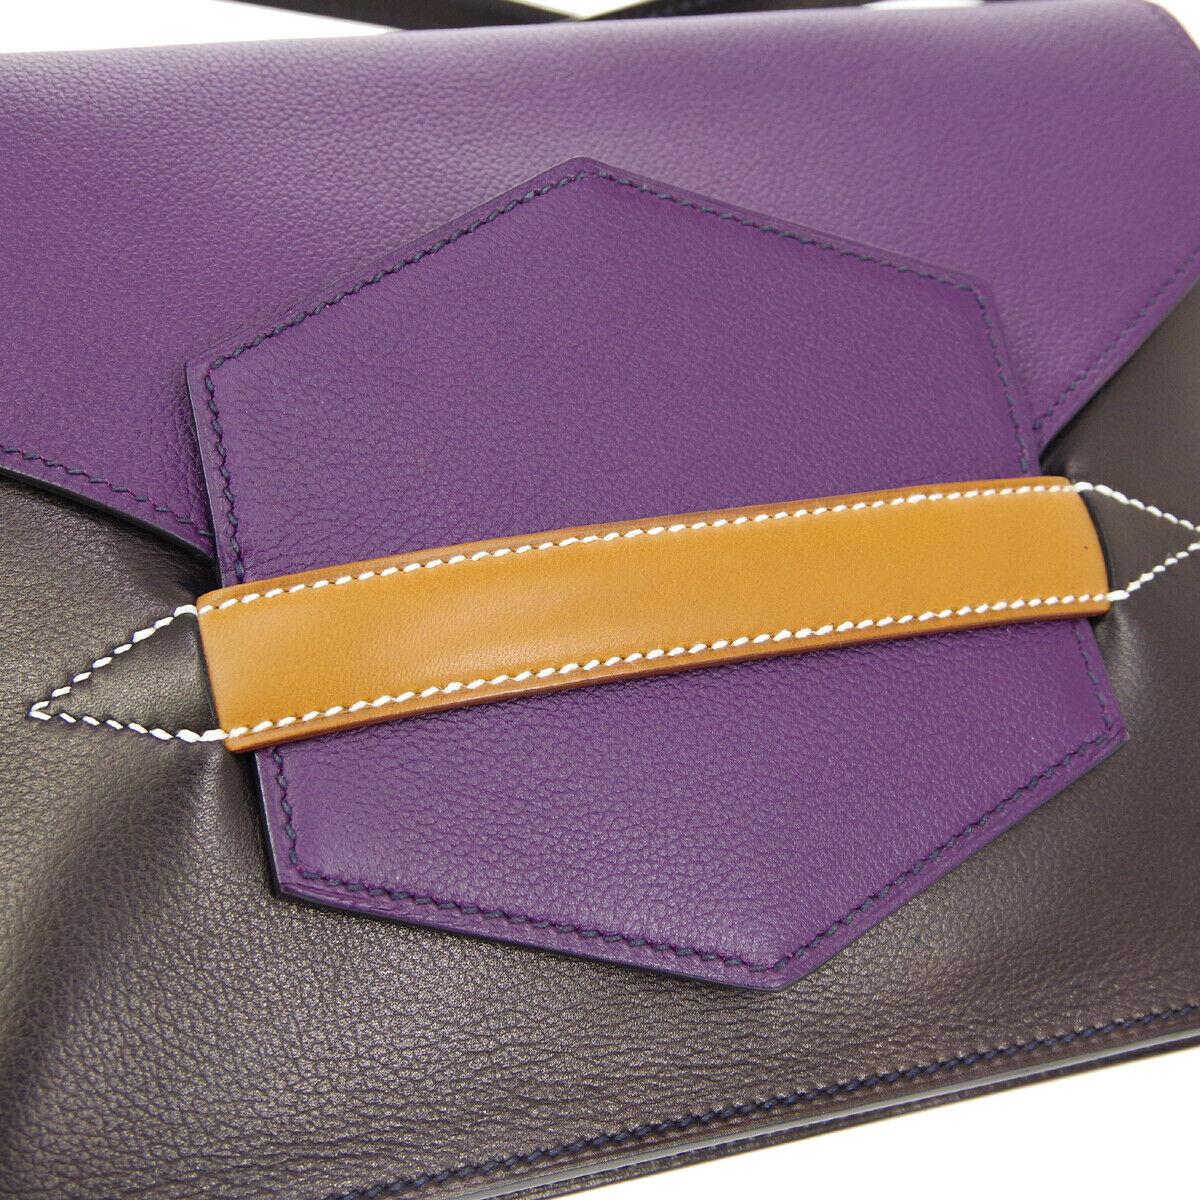 Hermes Purple Cognac Leather  2 in 1 Evening Clutch Shoulder Bag in Box

Leather
Palladium tone hardware
Leather lining
Made in France
Adjustable shoulder strap 15.5-19.25